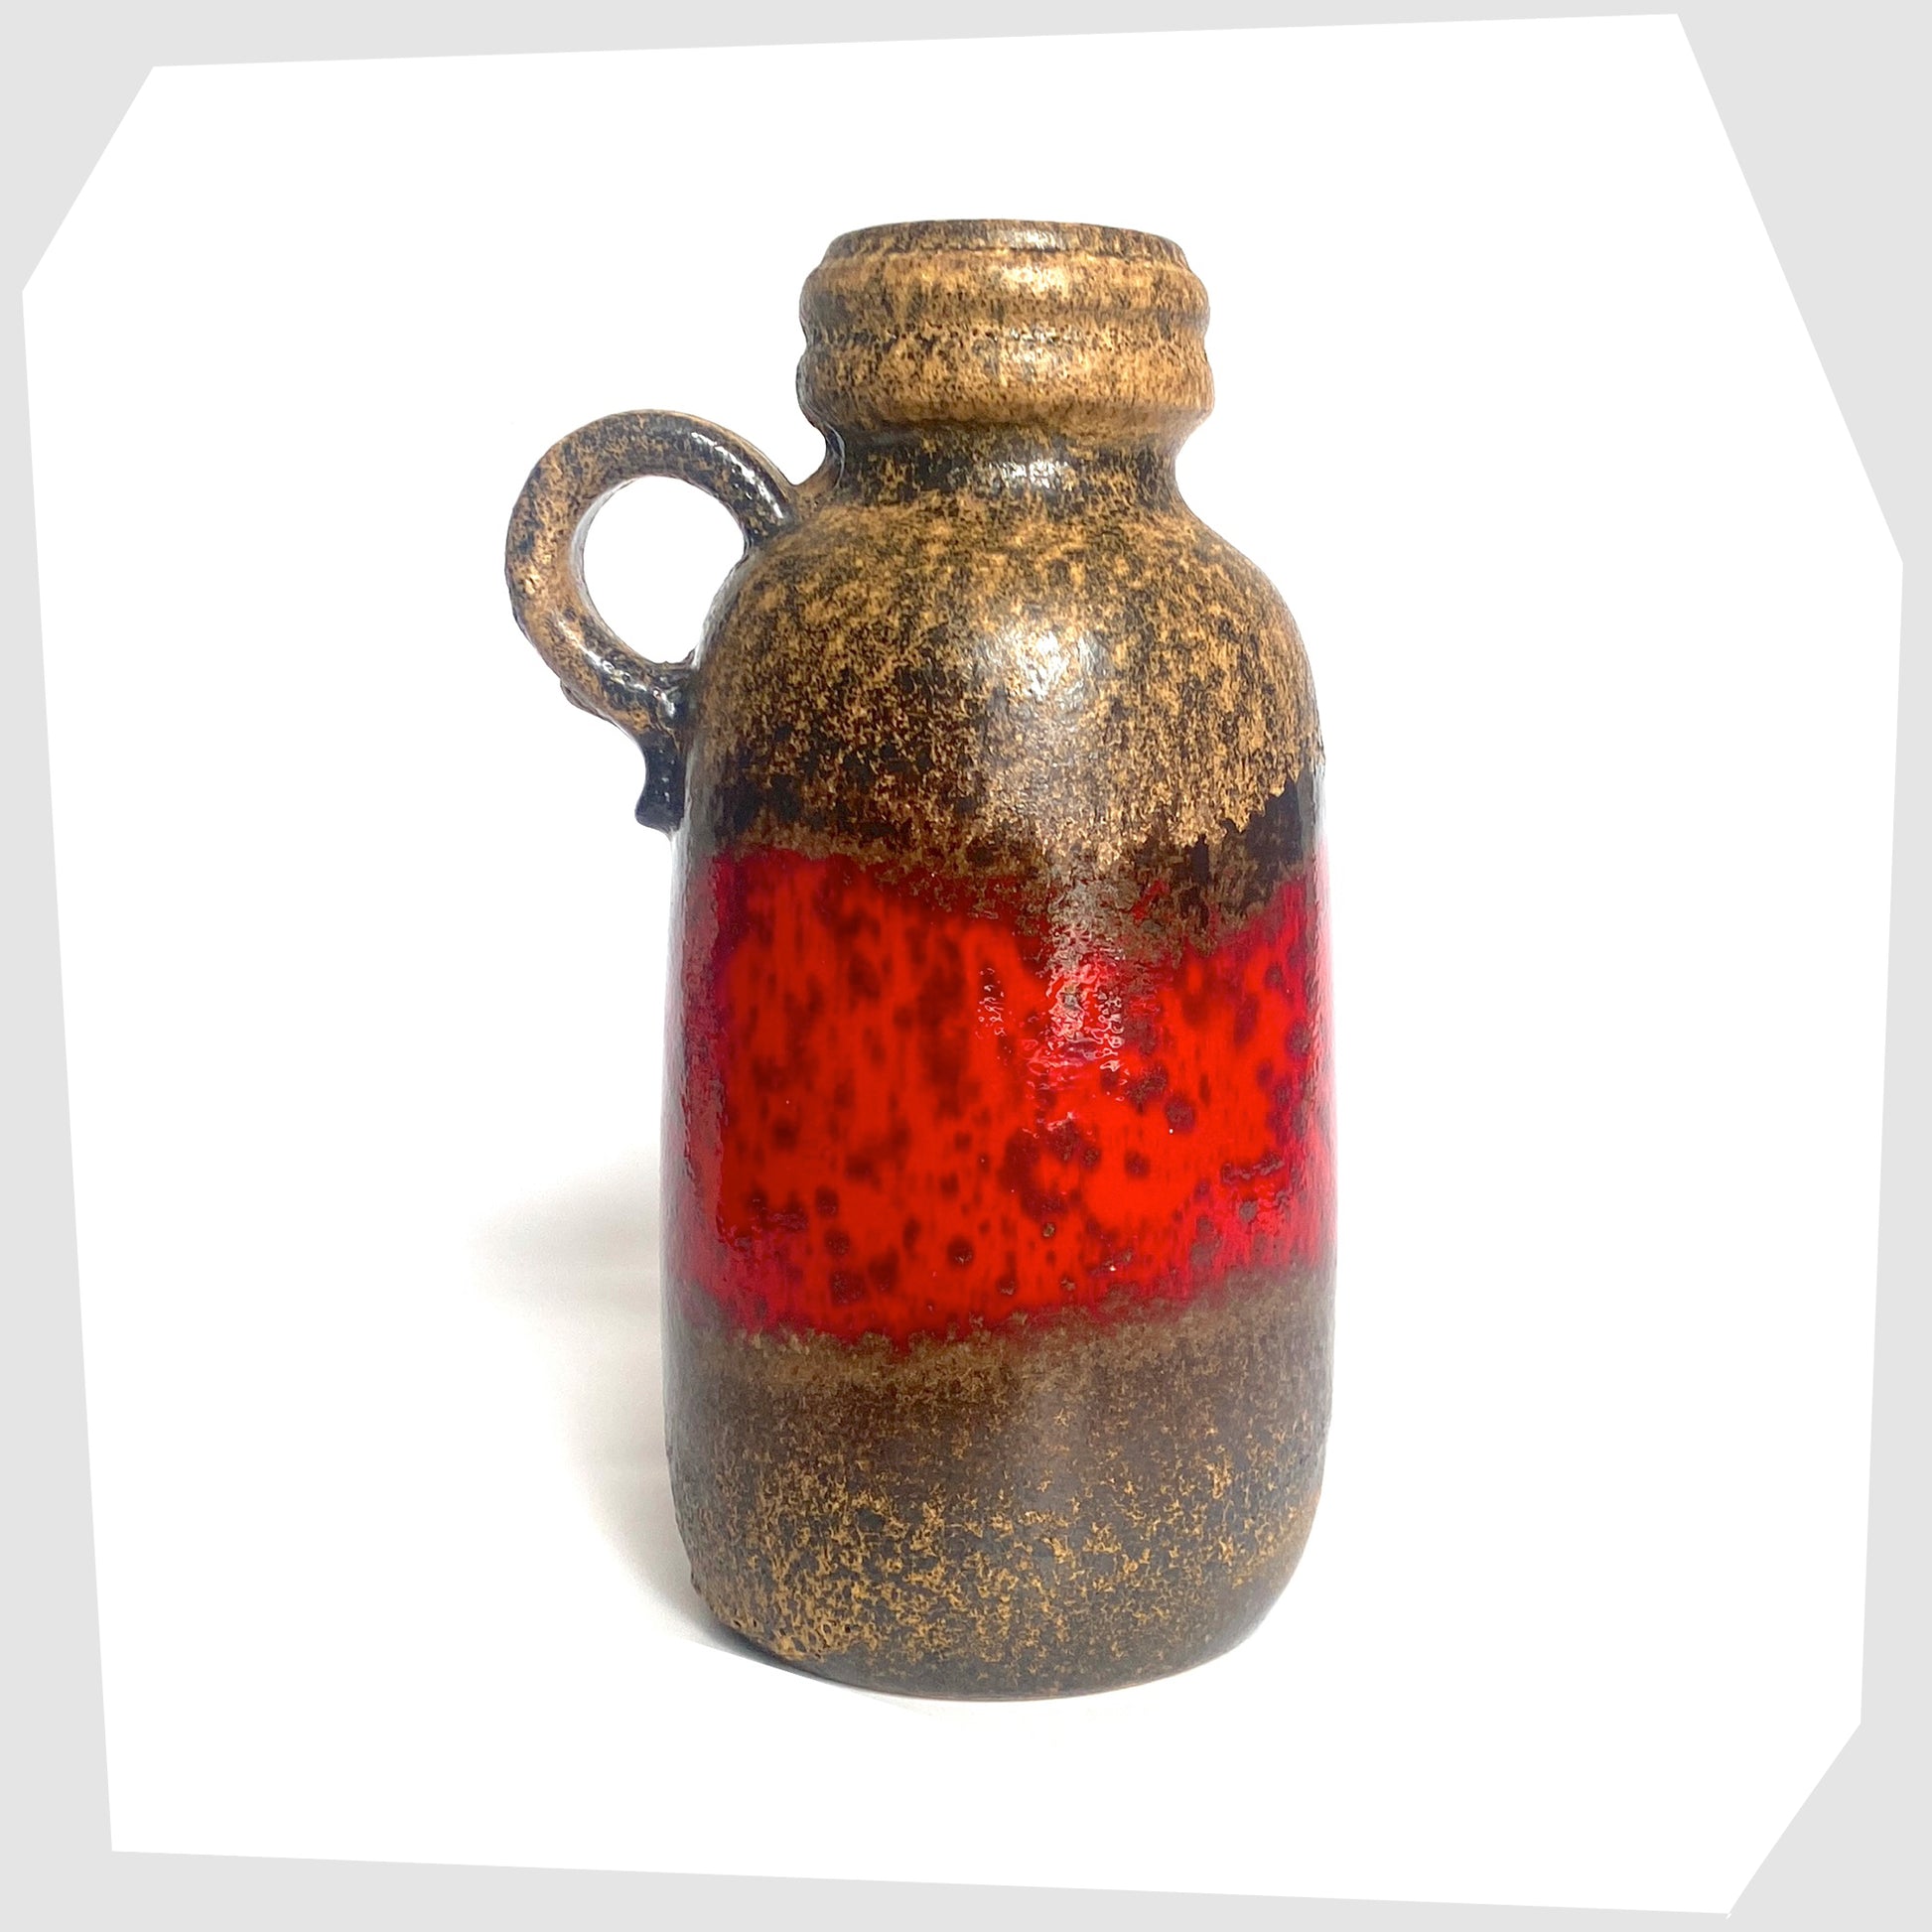 scheurich-keramik-413-26-vase-with-volcanic-red-band